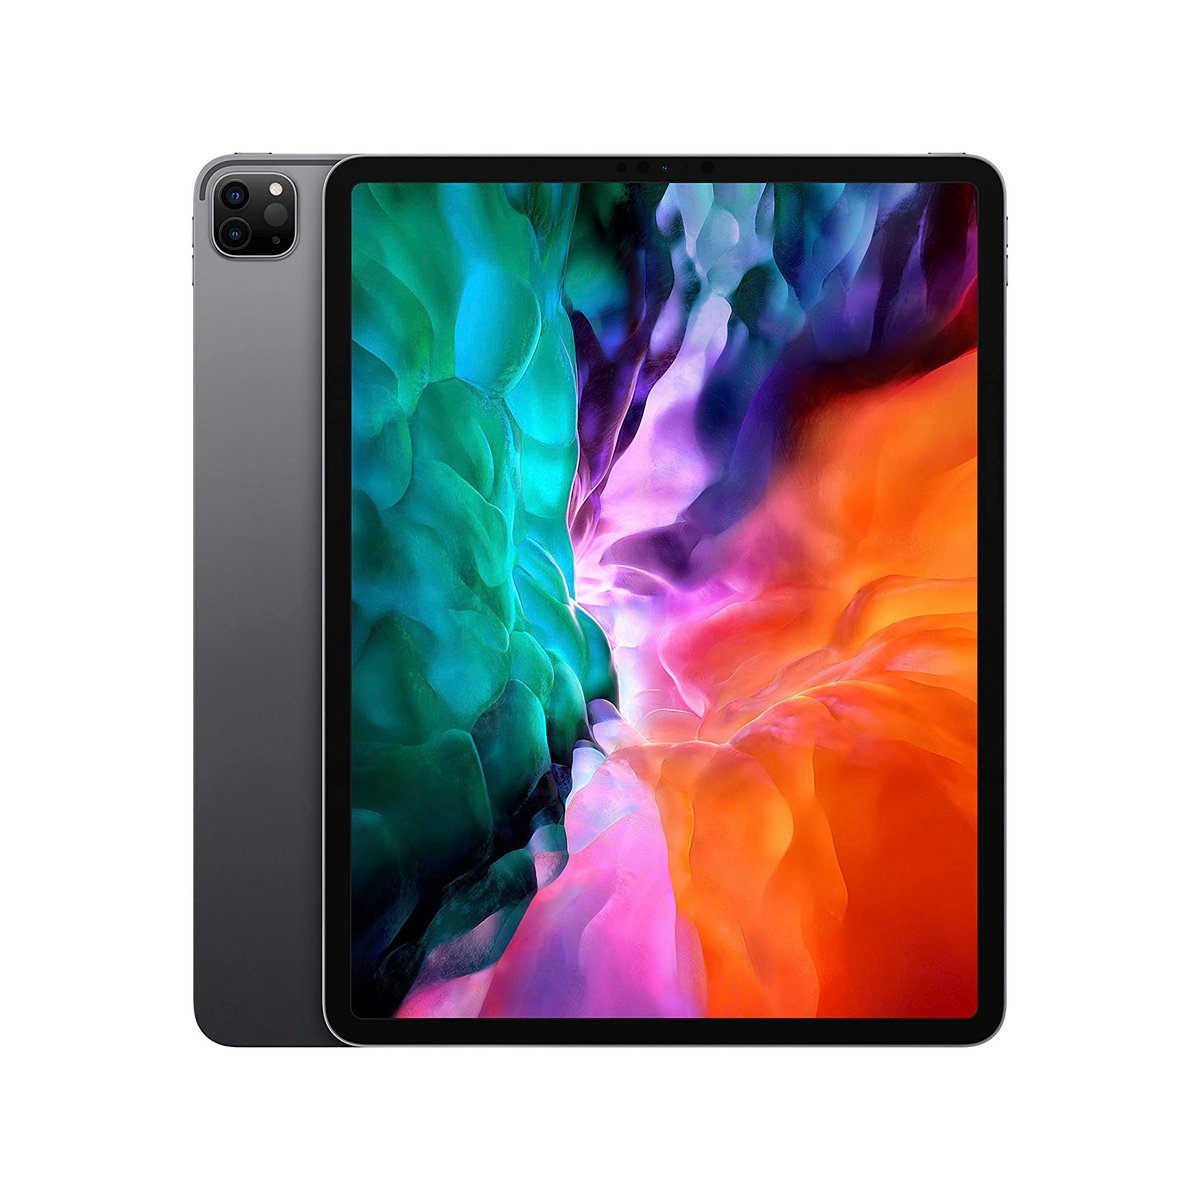 Apple iPad Pro (12.9-inch, Wi-Fi, 512GB) - Space Gray (4th Generation)